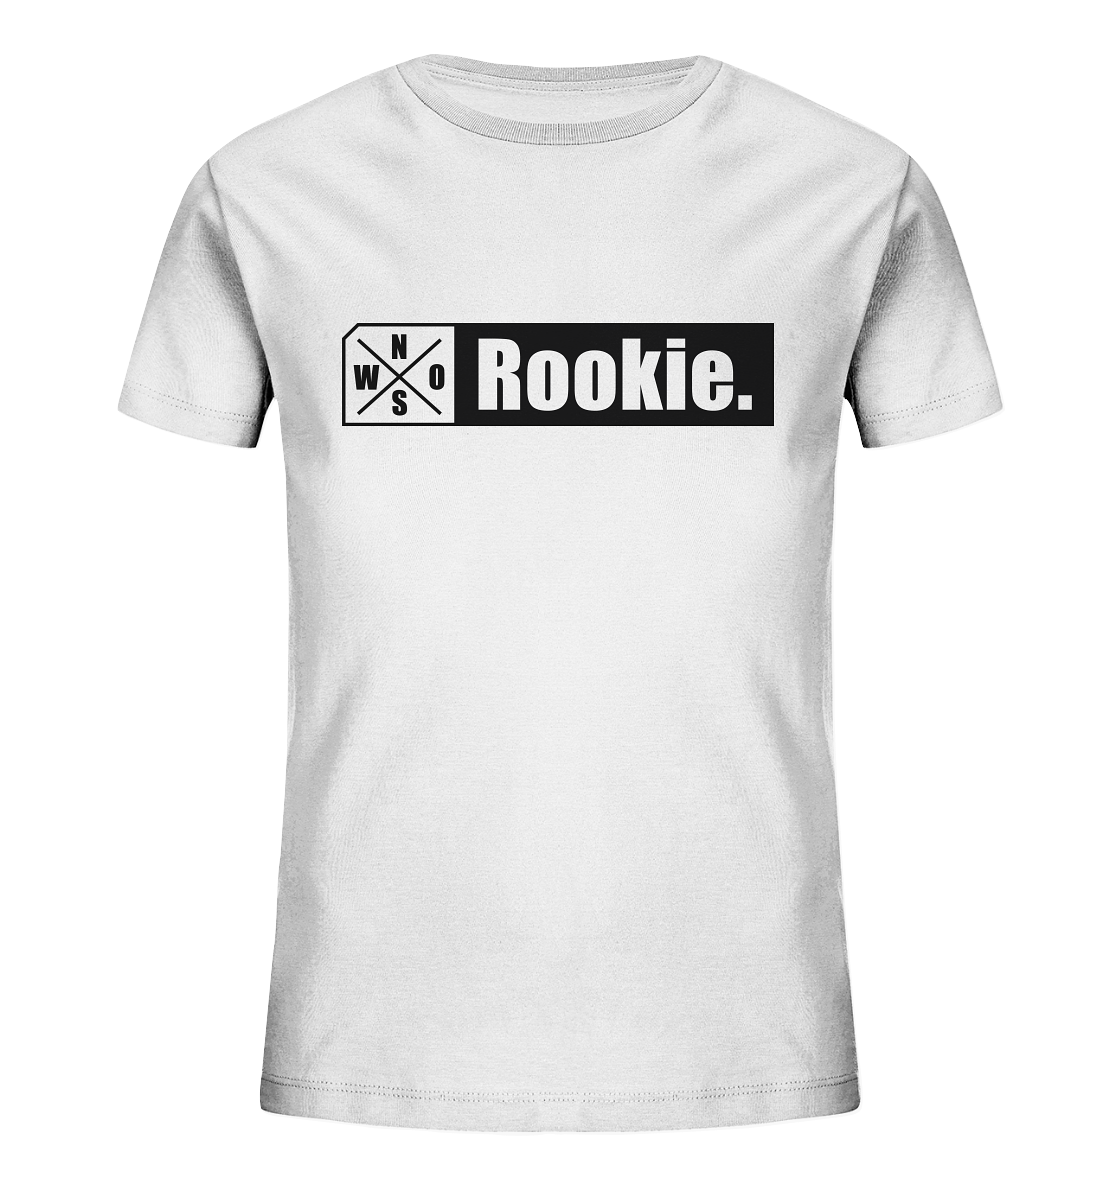 N.O.S.W. BLOCK Teamsport Shirt "Rookie." Organic Kids UNISEX T-Shirt weiss